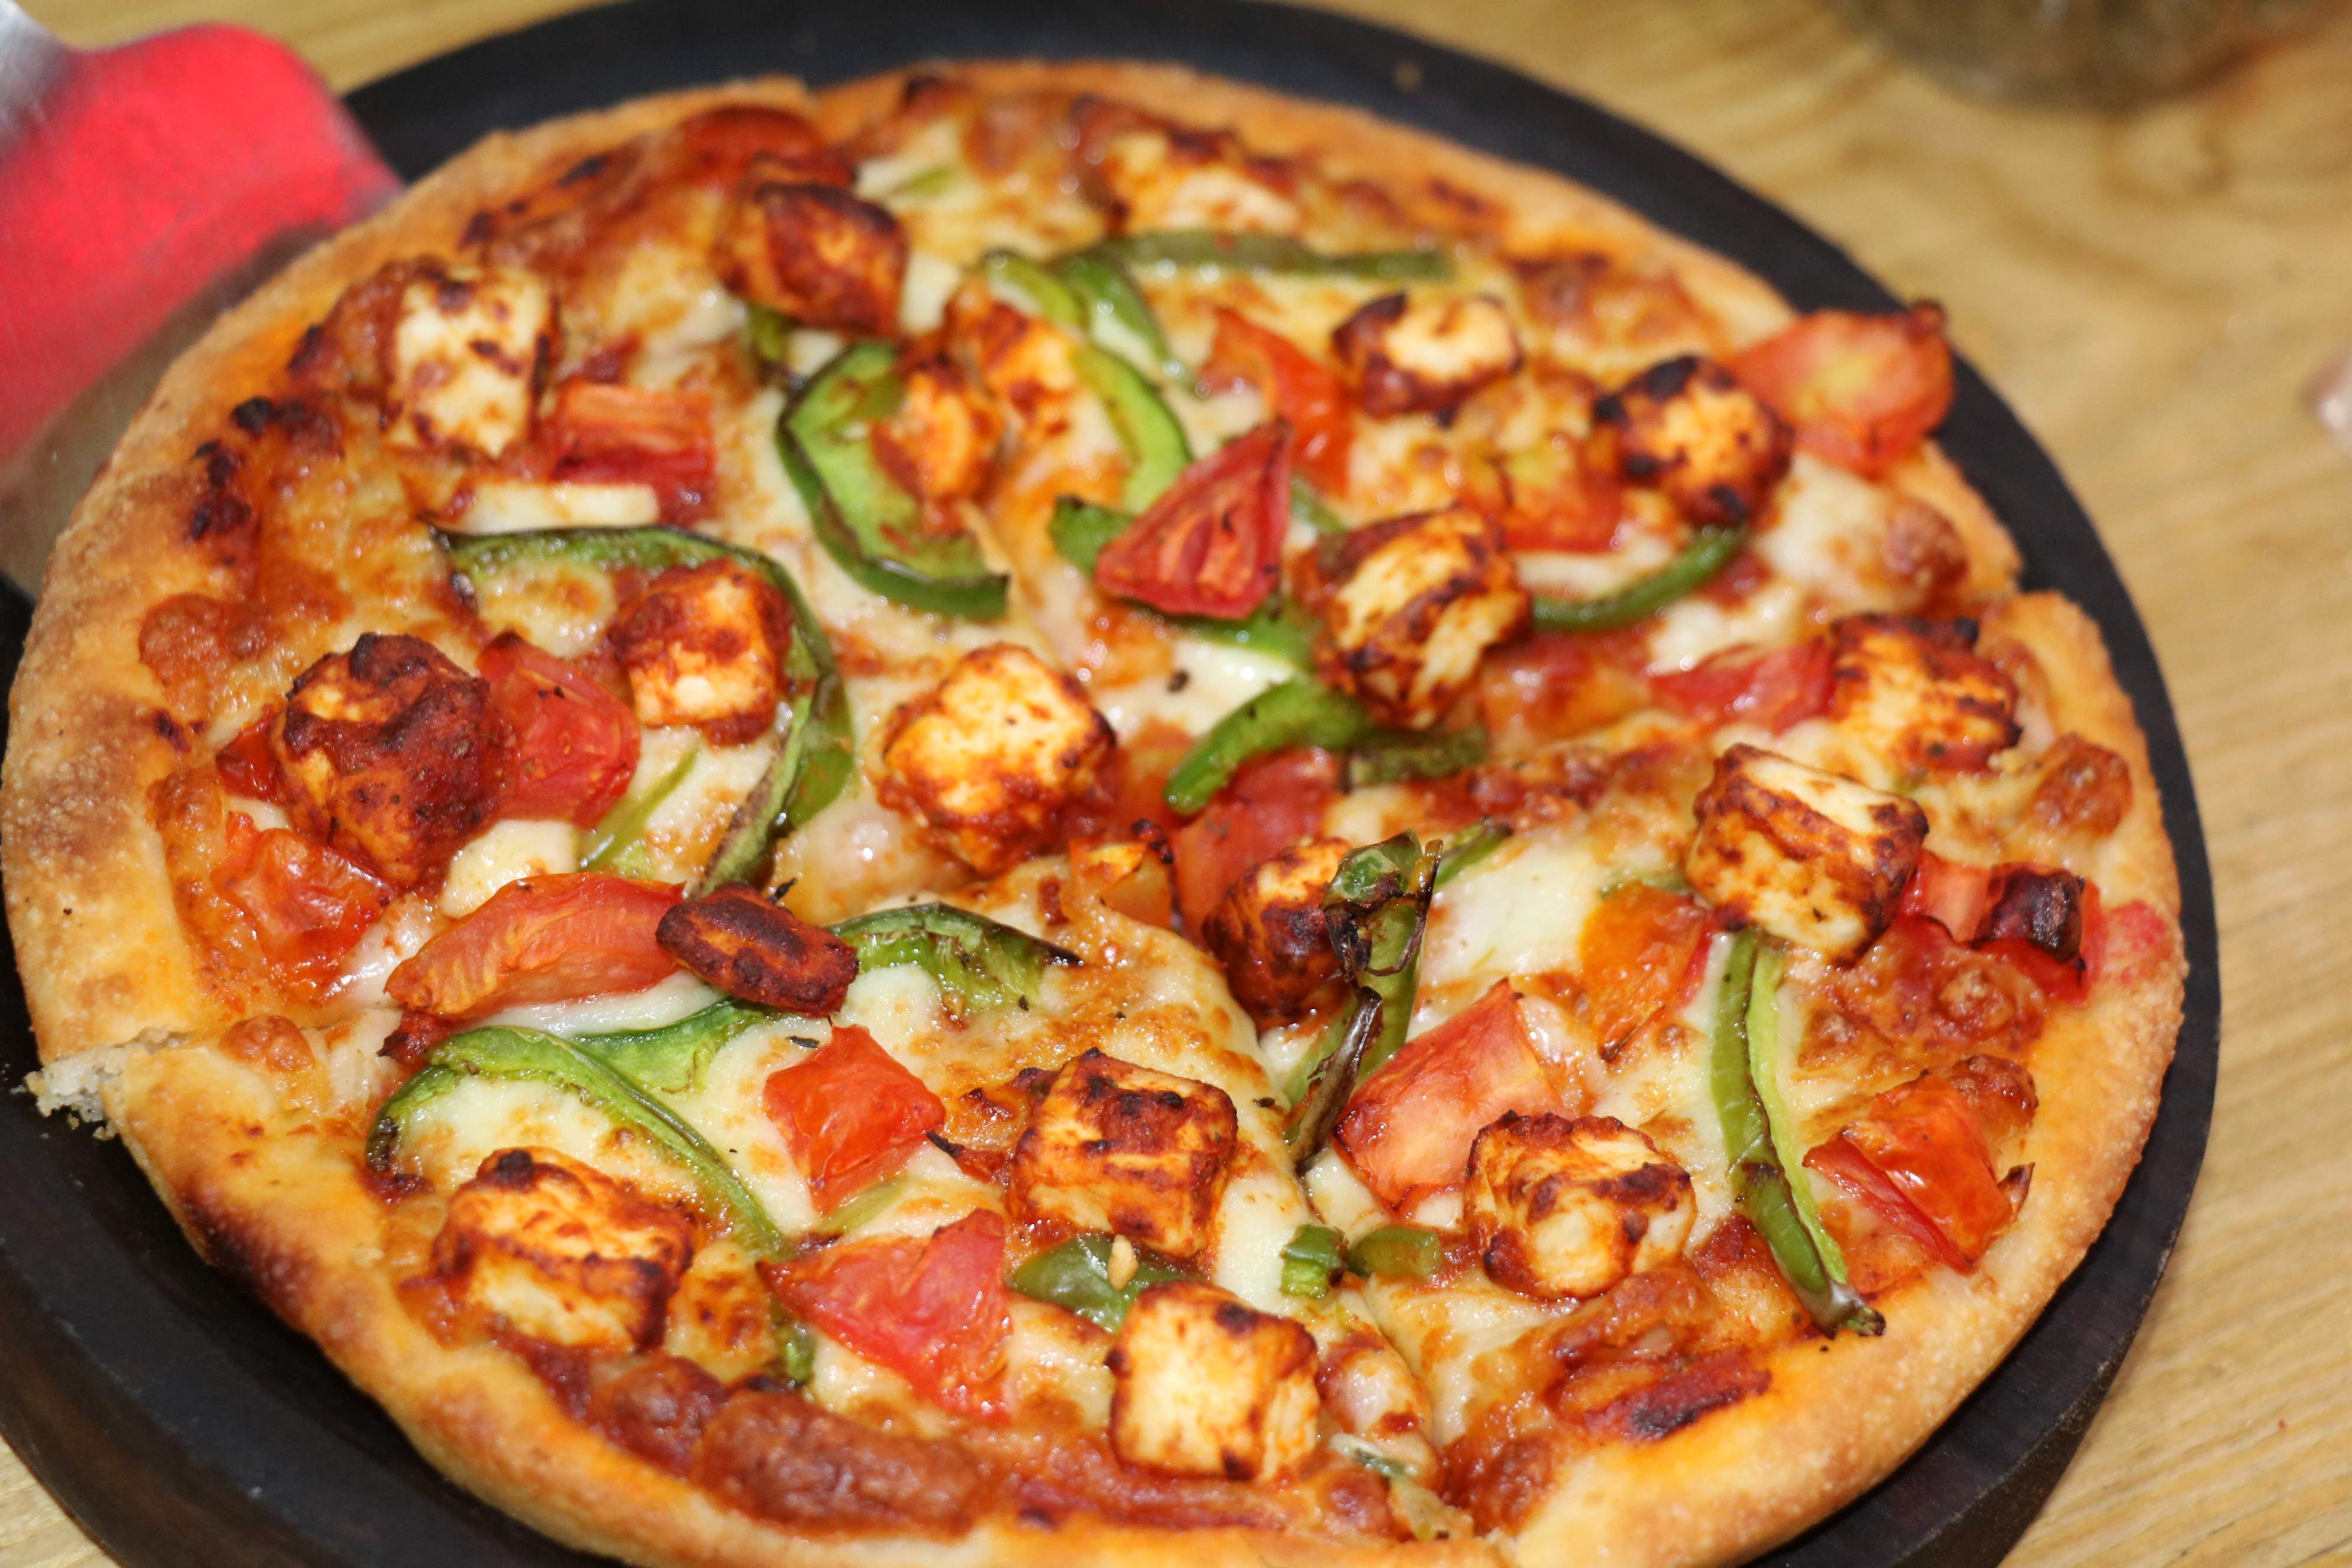 Dish,Pizza,Food,Cuisine,Pizza cheese,California-style pizza,Flatbread,Ingredient,Italian food,Fast food